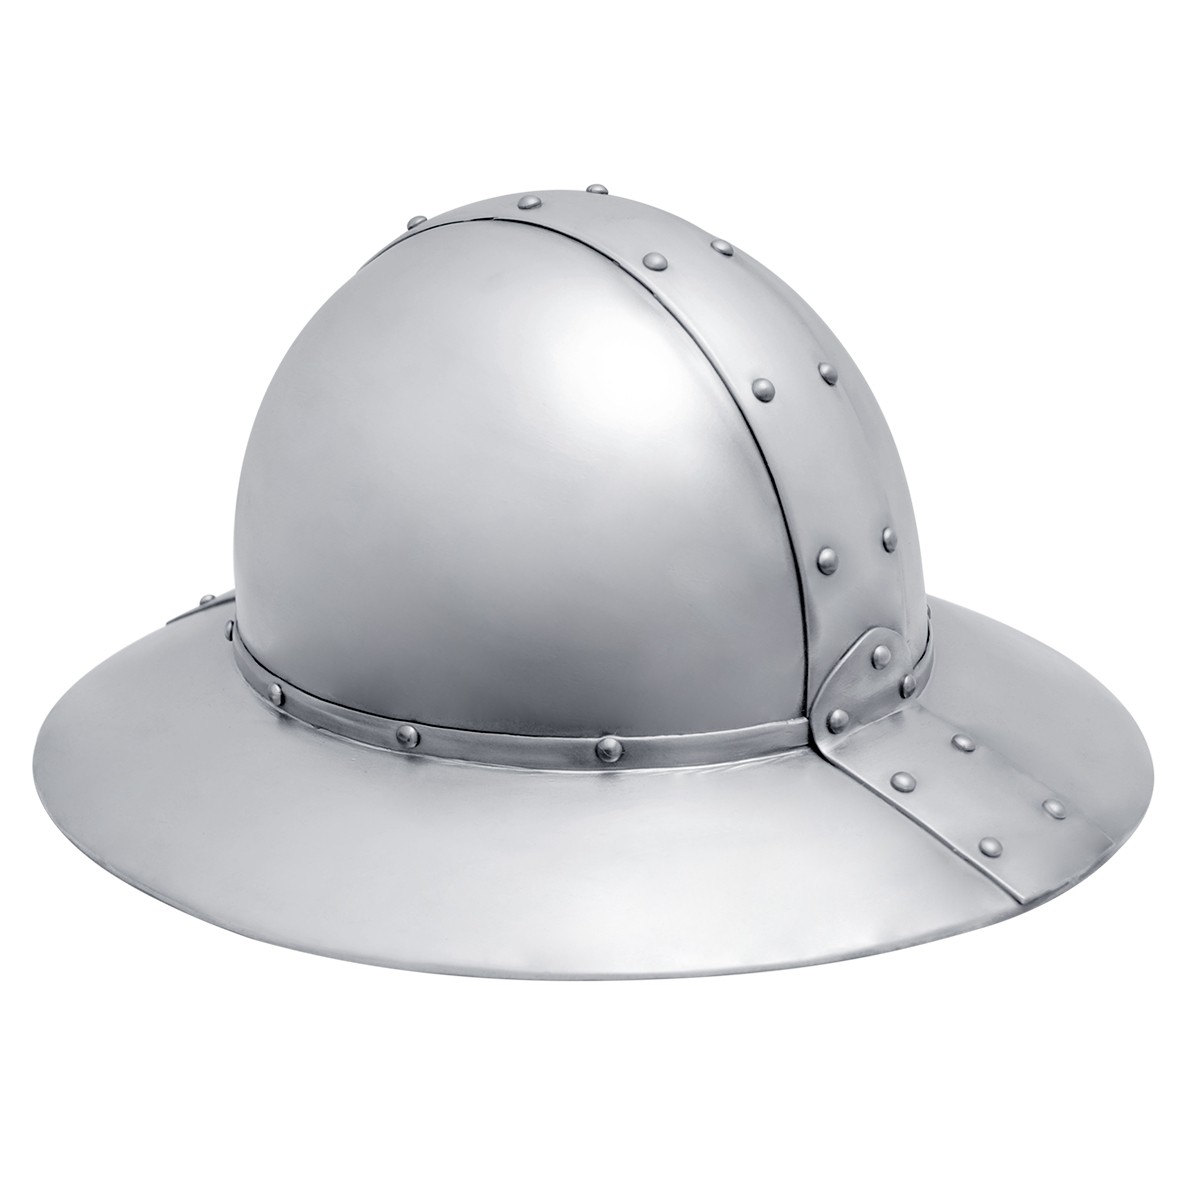 XIII th C Kettle Hat helmet